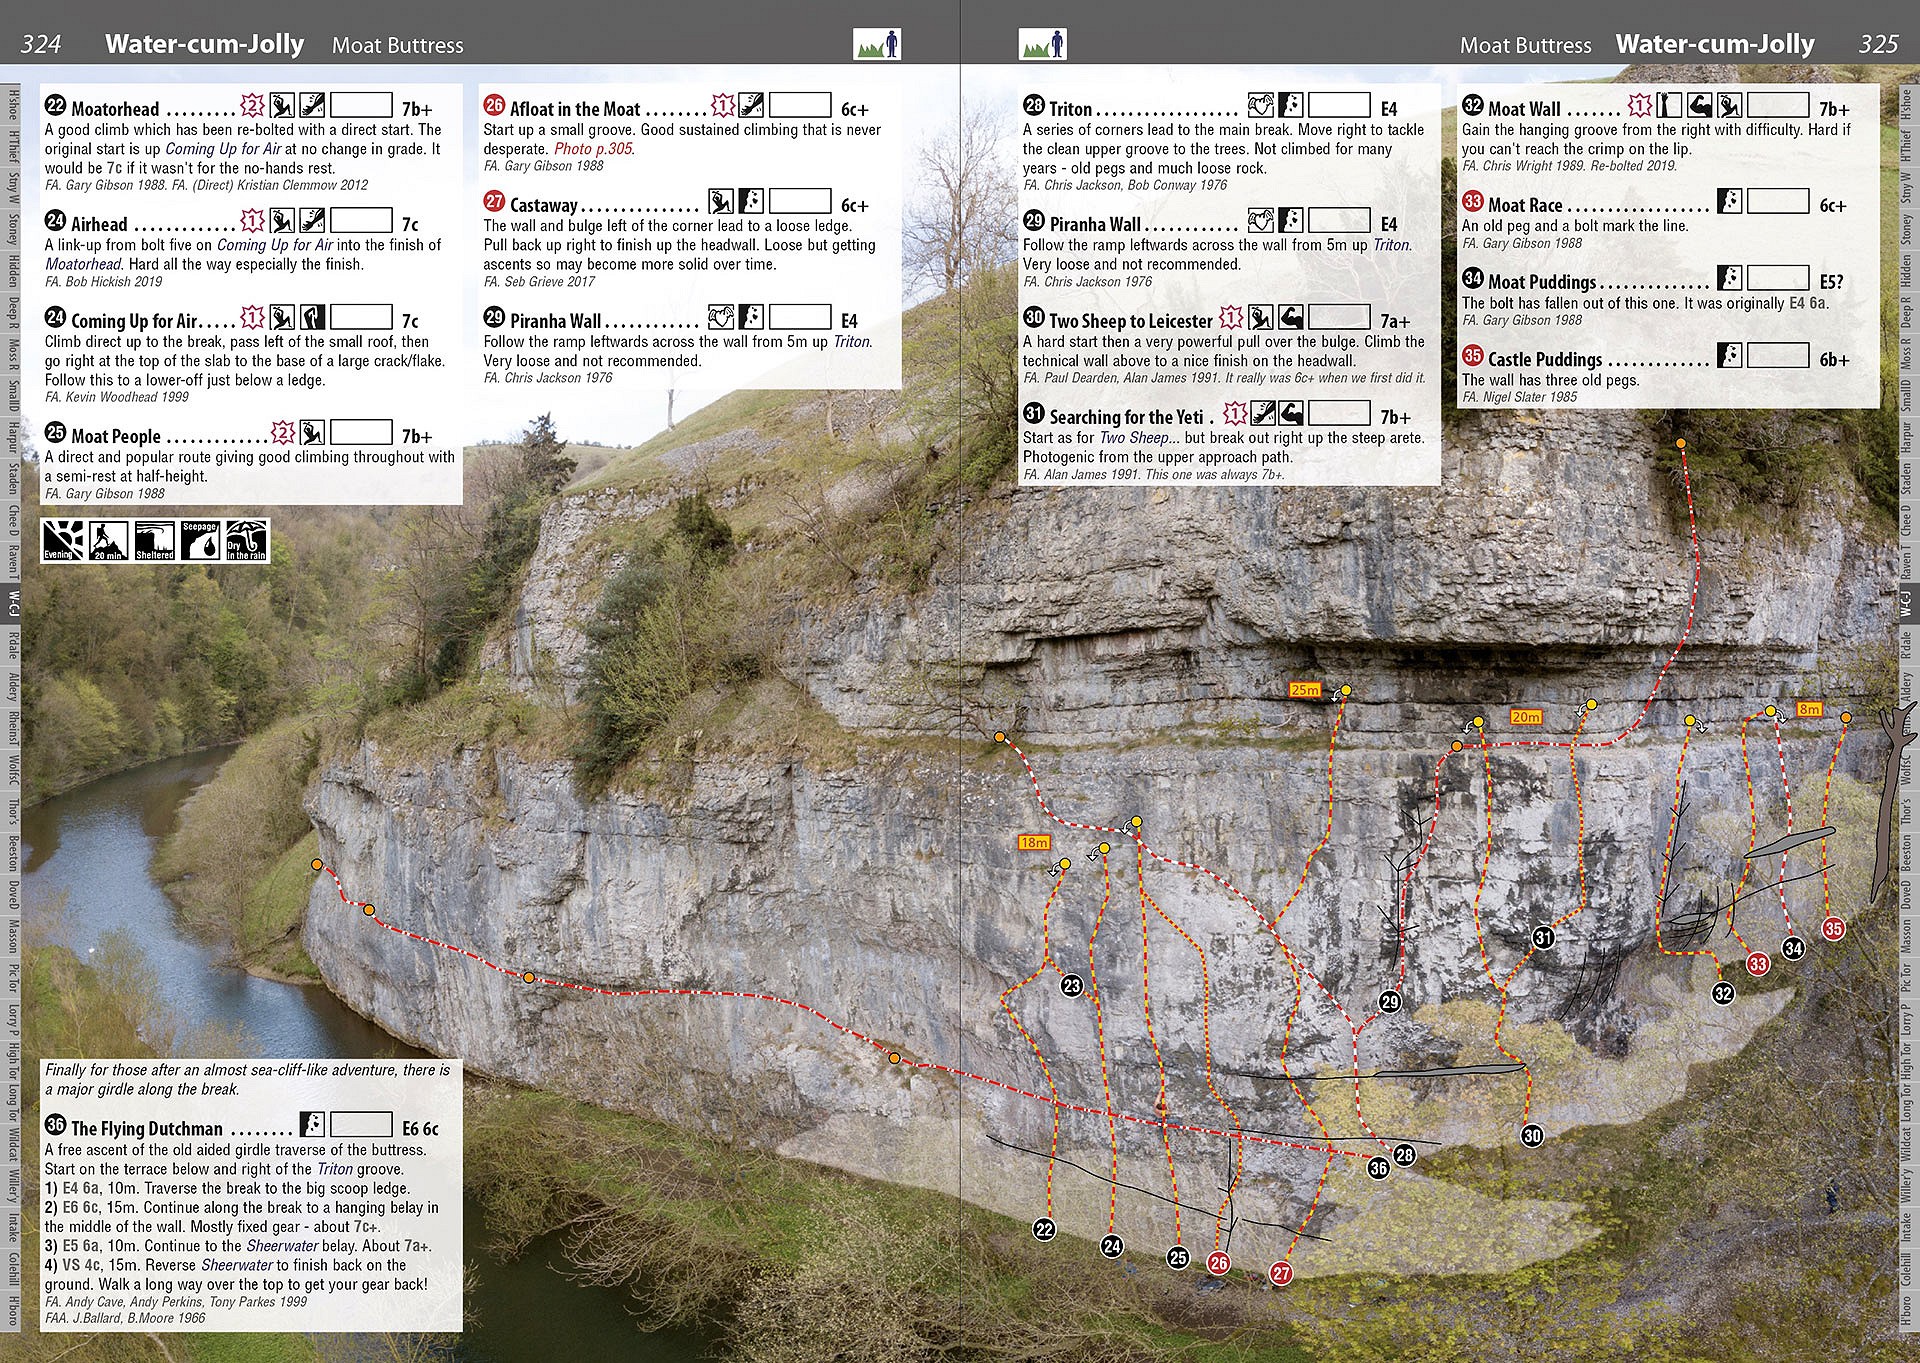 Peak Limestone Rockfax example page - Moat Buttress in Water-cum-Jolly  © Rockfax